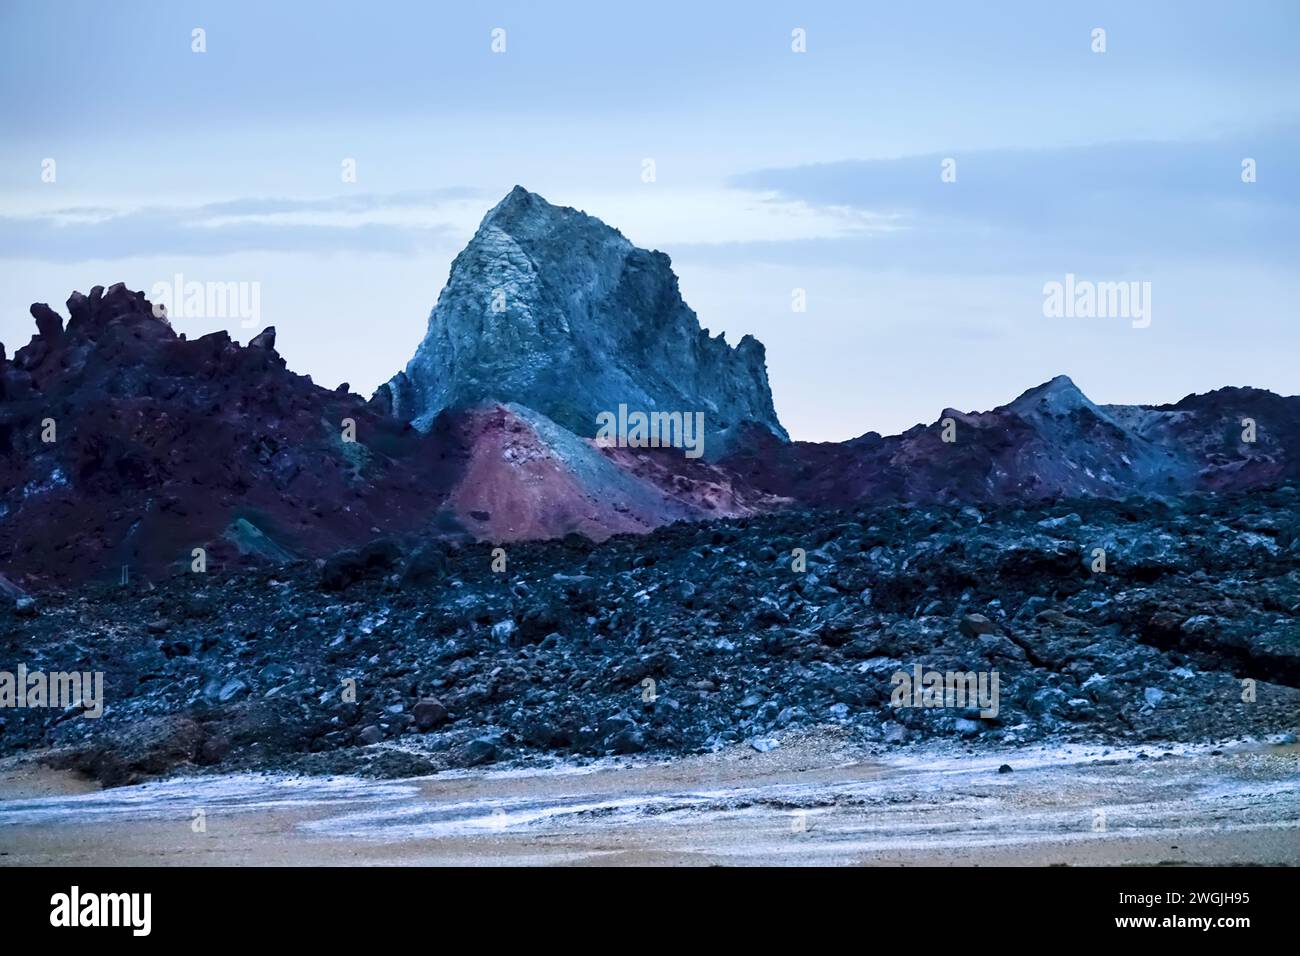 White mountain. Salt mountains and desert landscape with free-standing trees. 'Martian landscape'. Ormuz Island. Iran Stock Photo